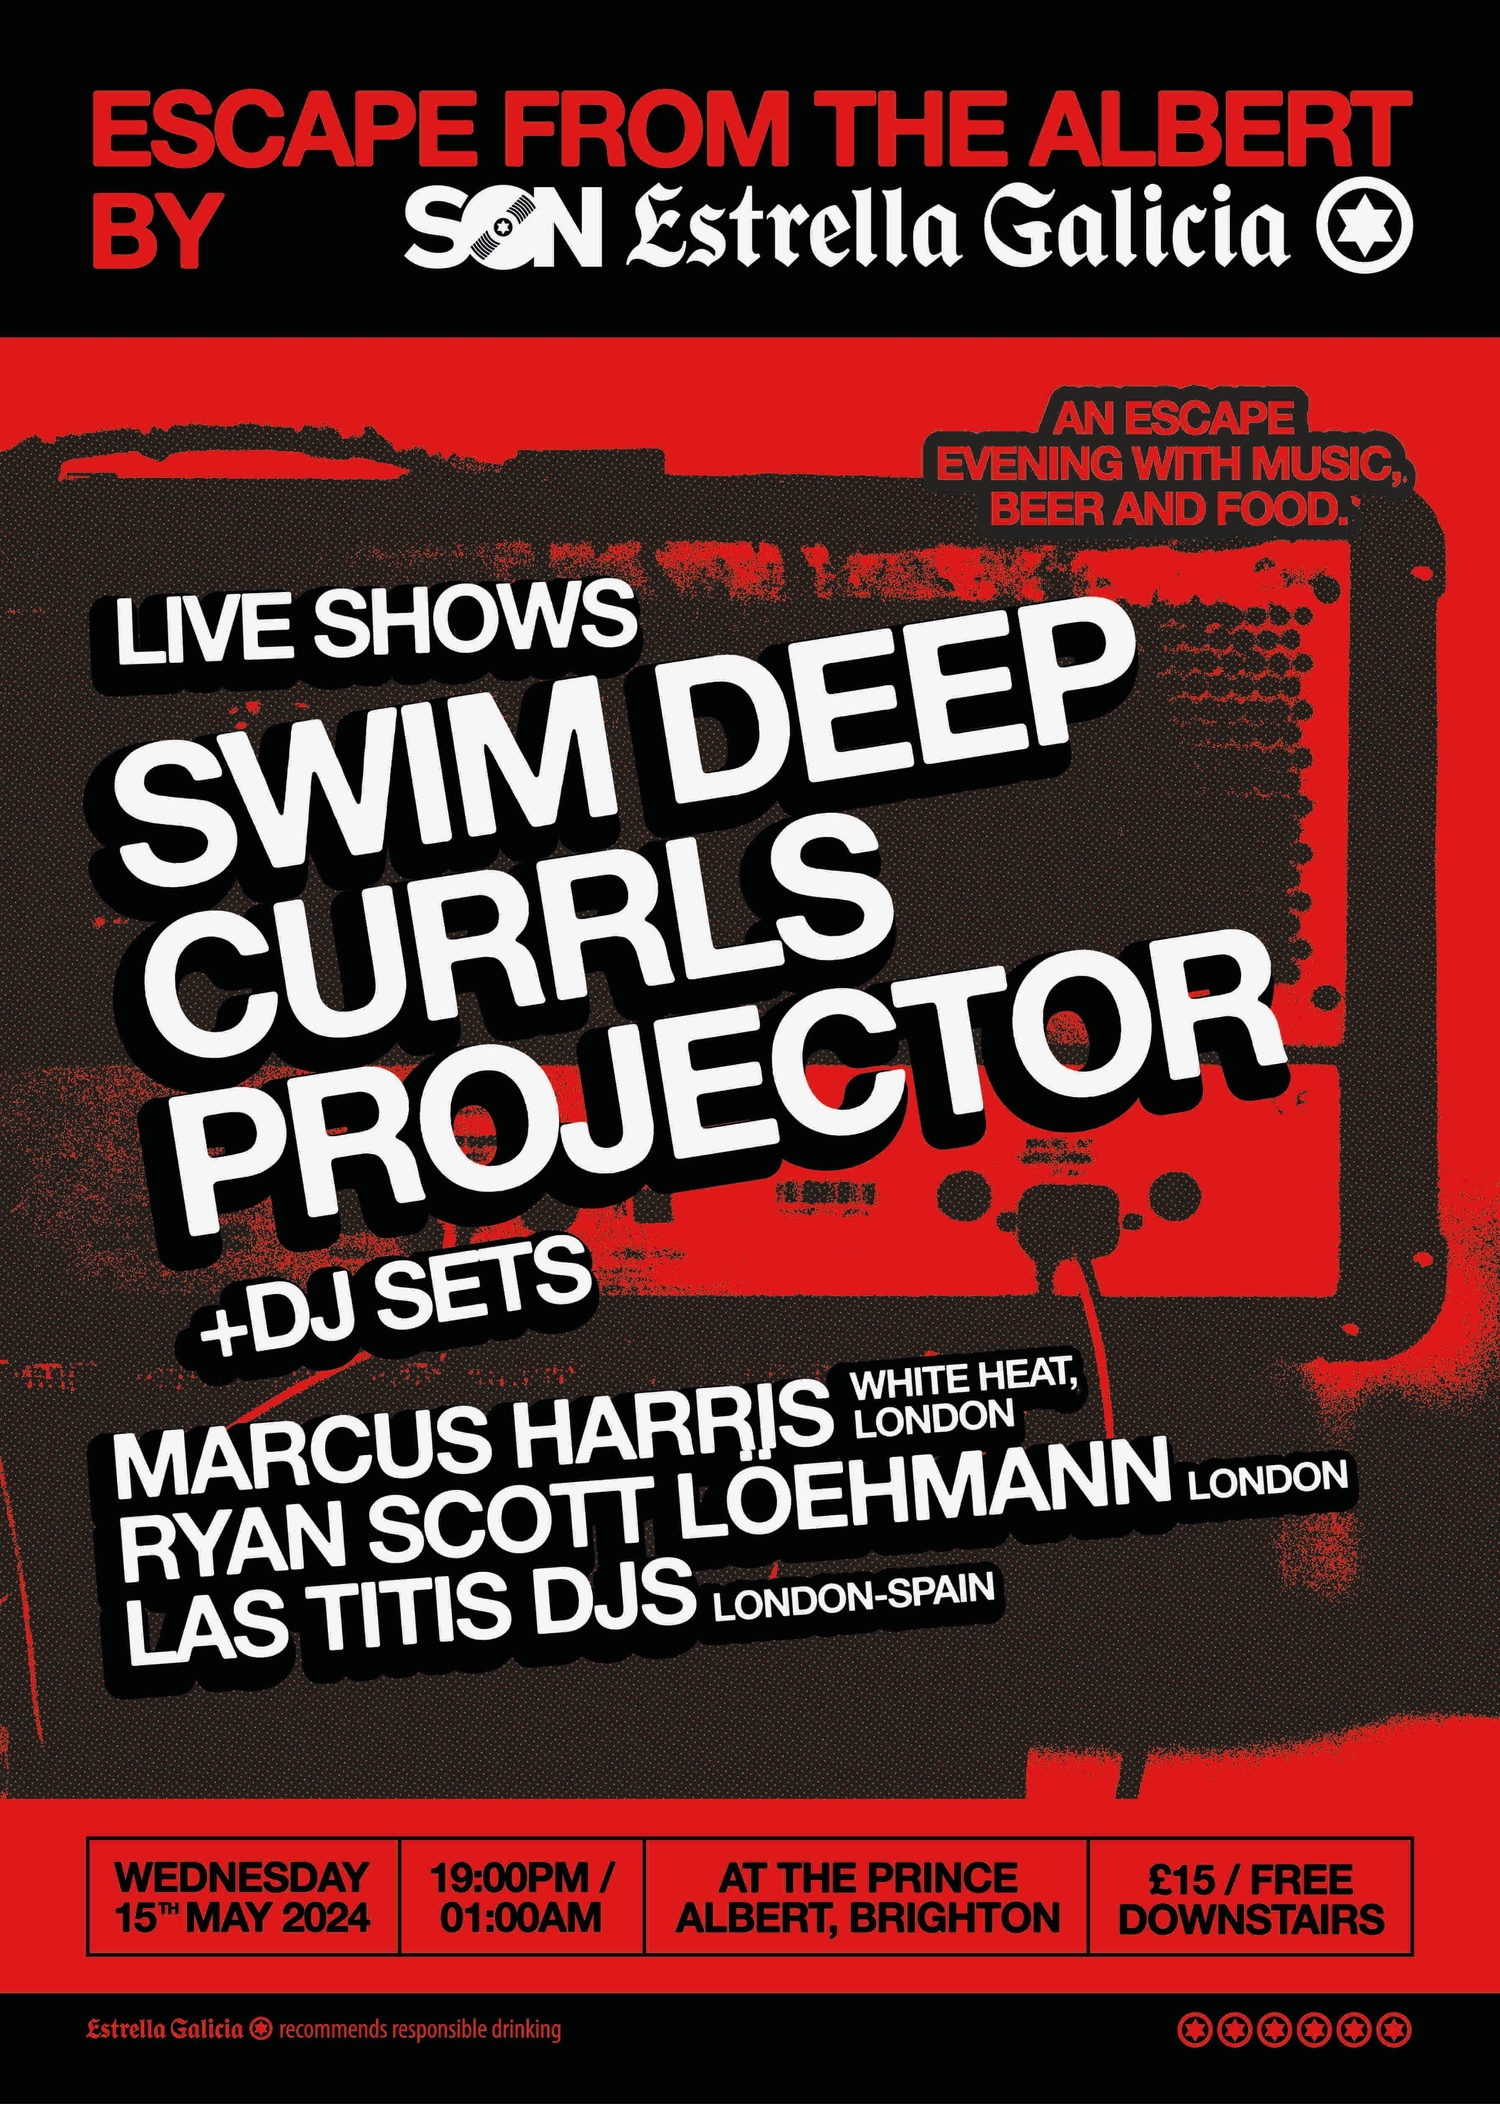 Swim Deep, Currls, and Projector to play SON Estrella Galicia's next micro-festival at Brighton's The Prince Albert